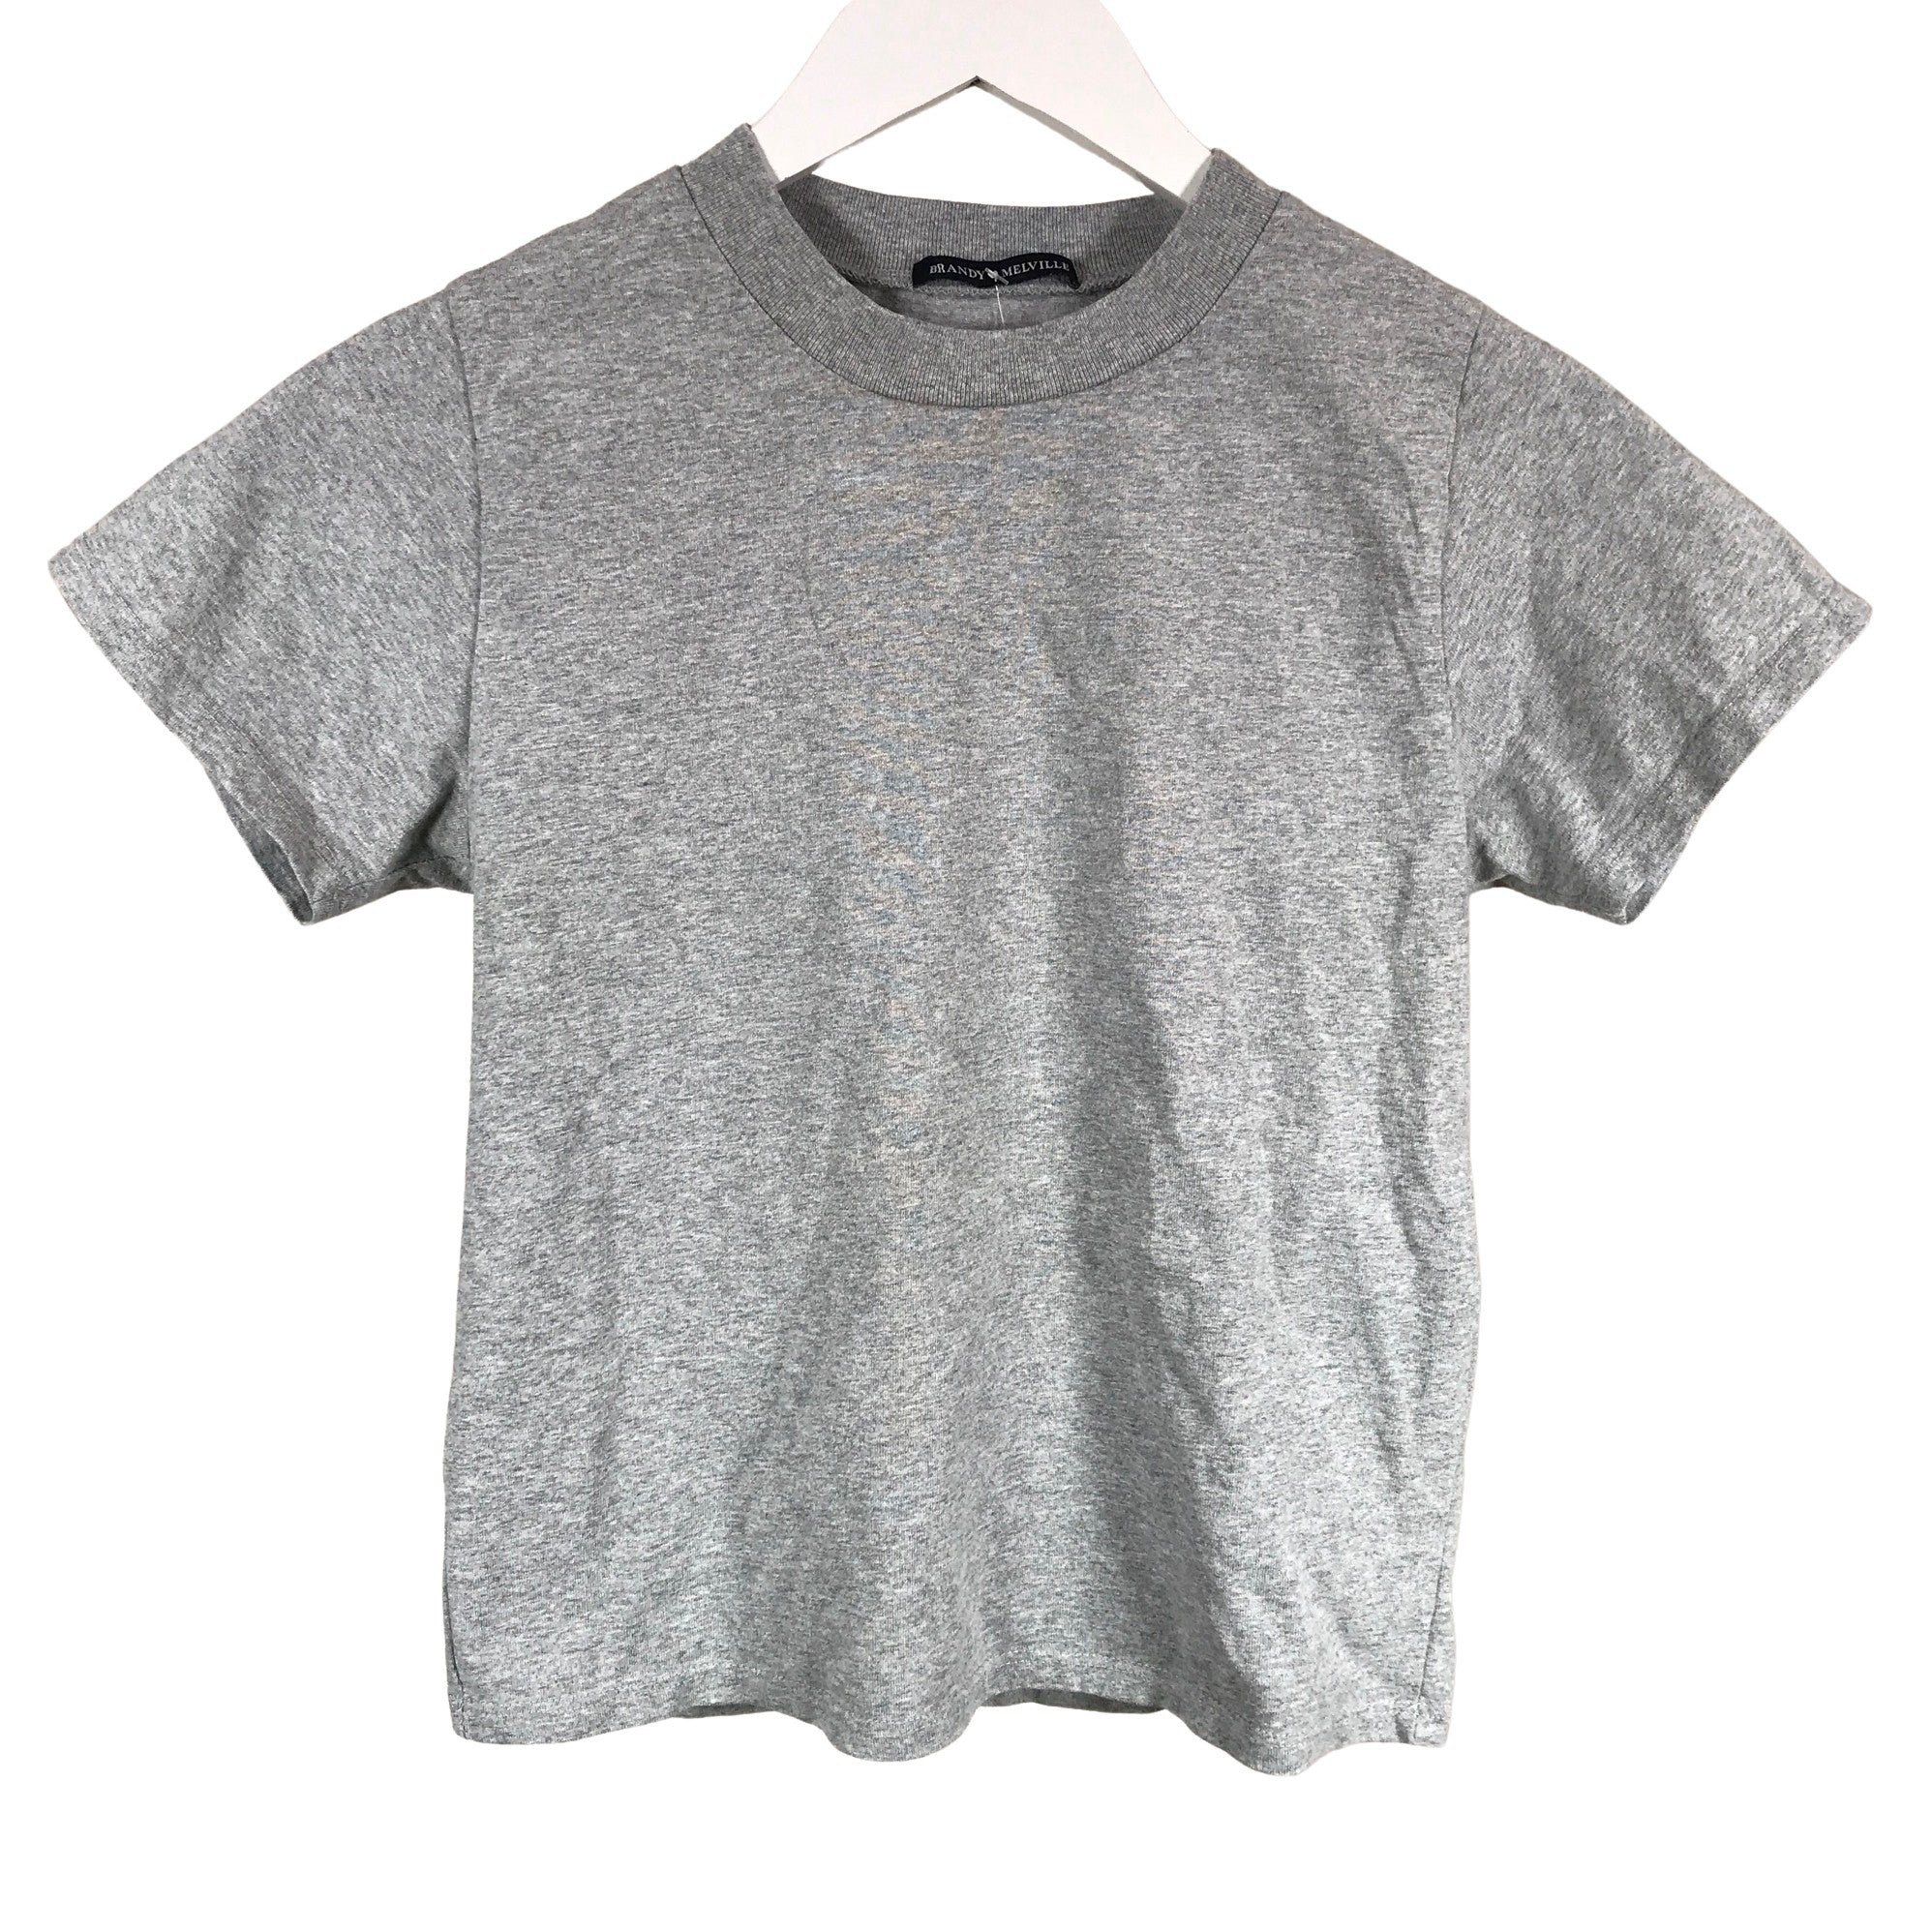 Women's Brandy Melville T-shirt, size 34 (Grey)